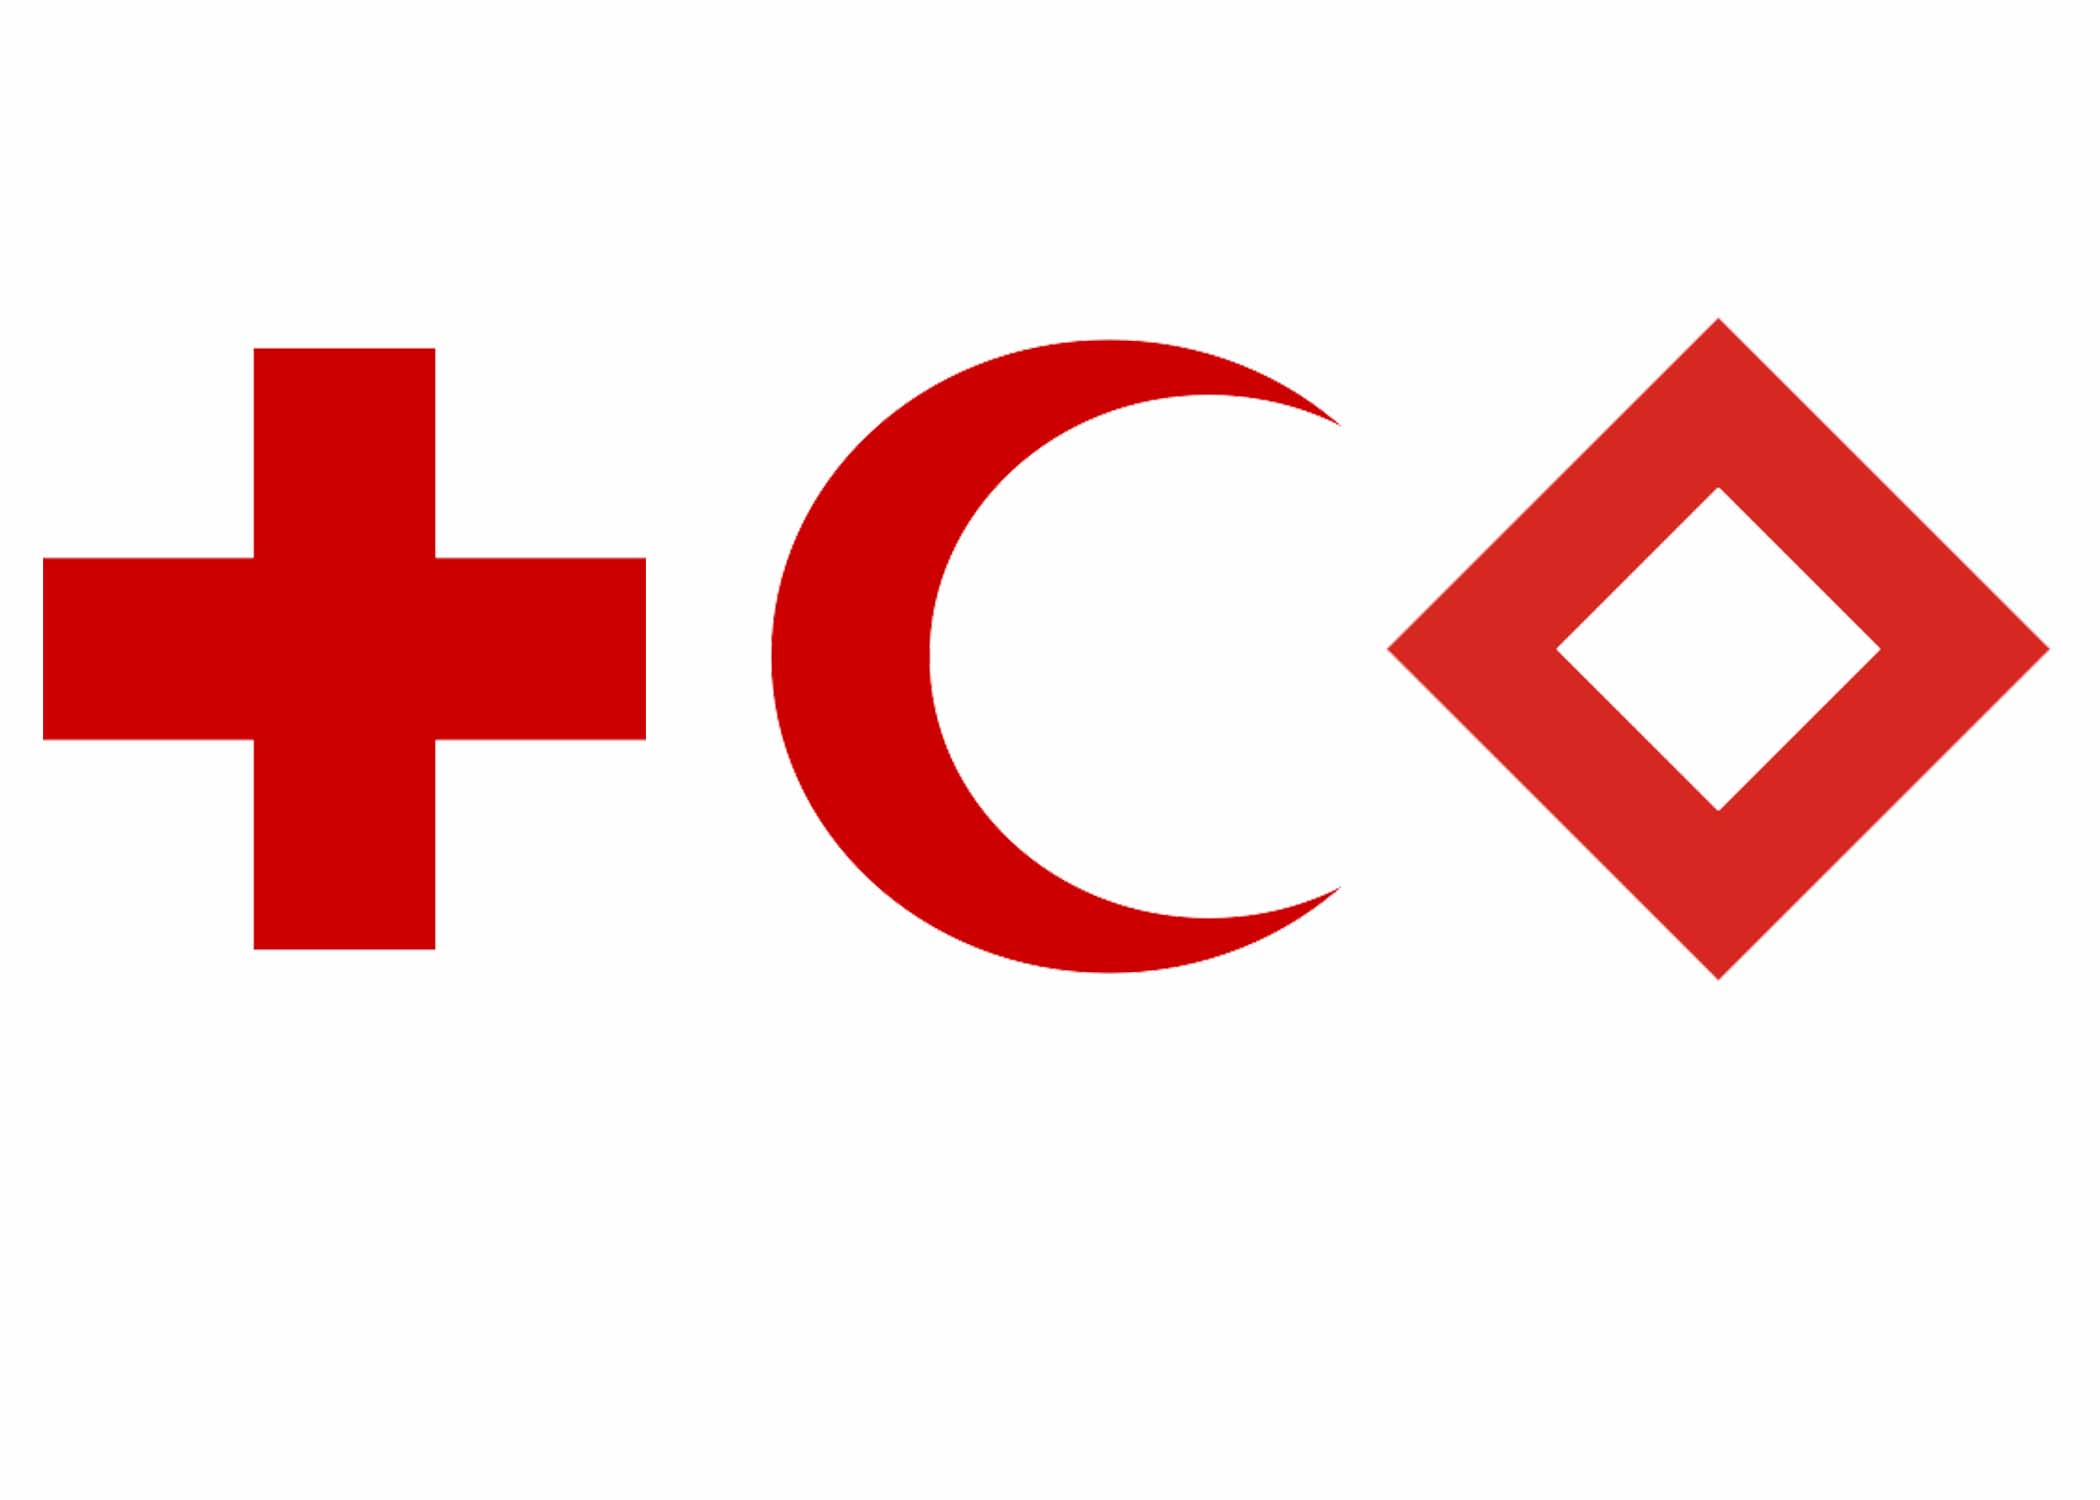 Red Cross Symbol - ClipArt Best